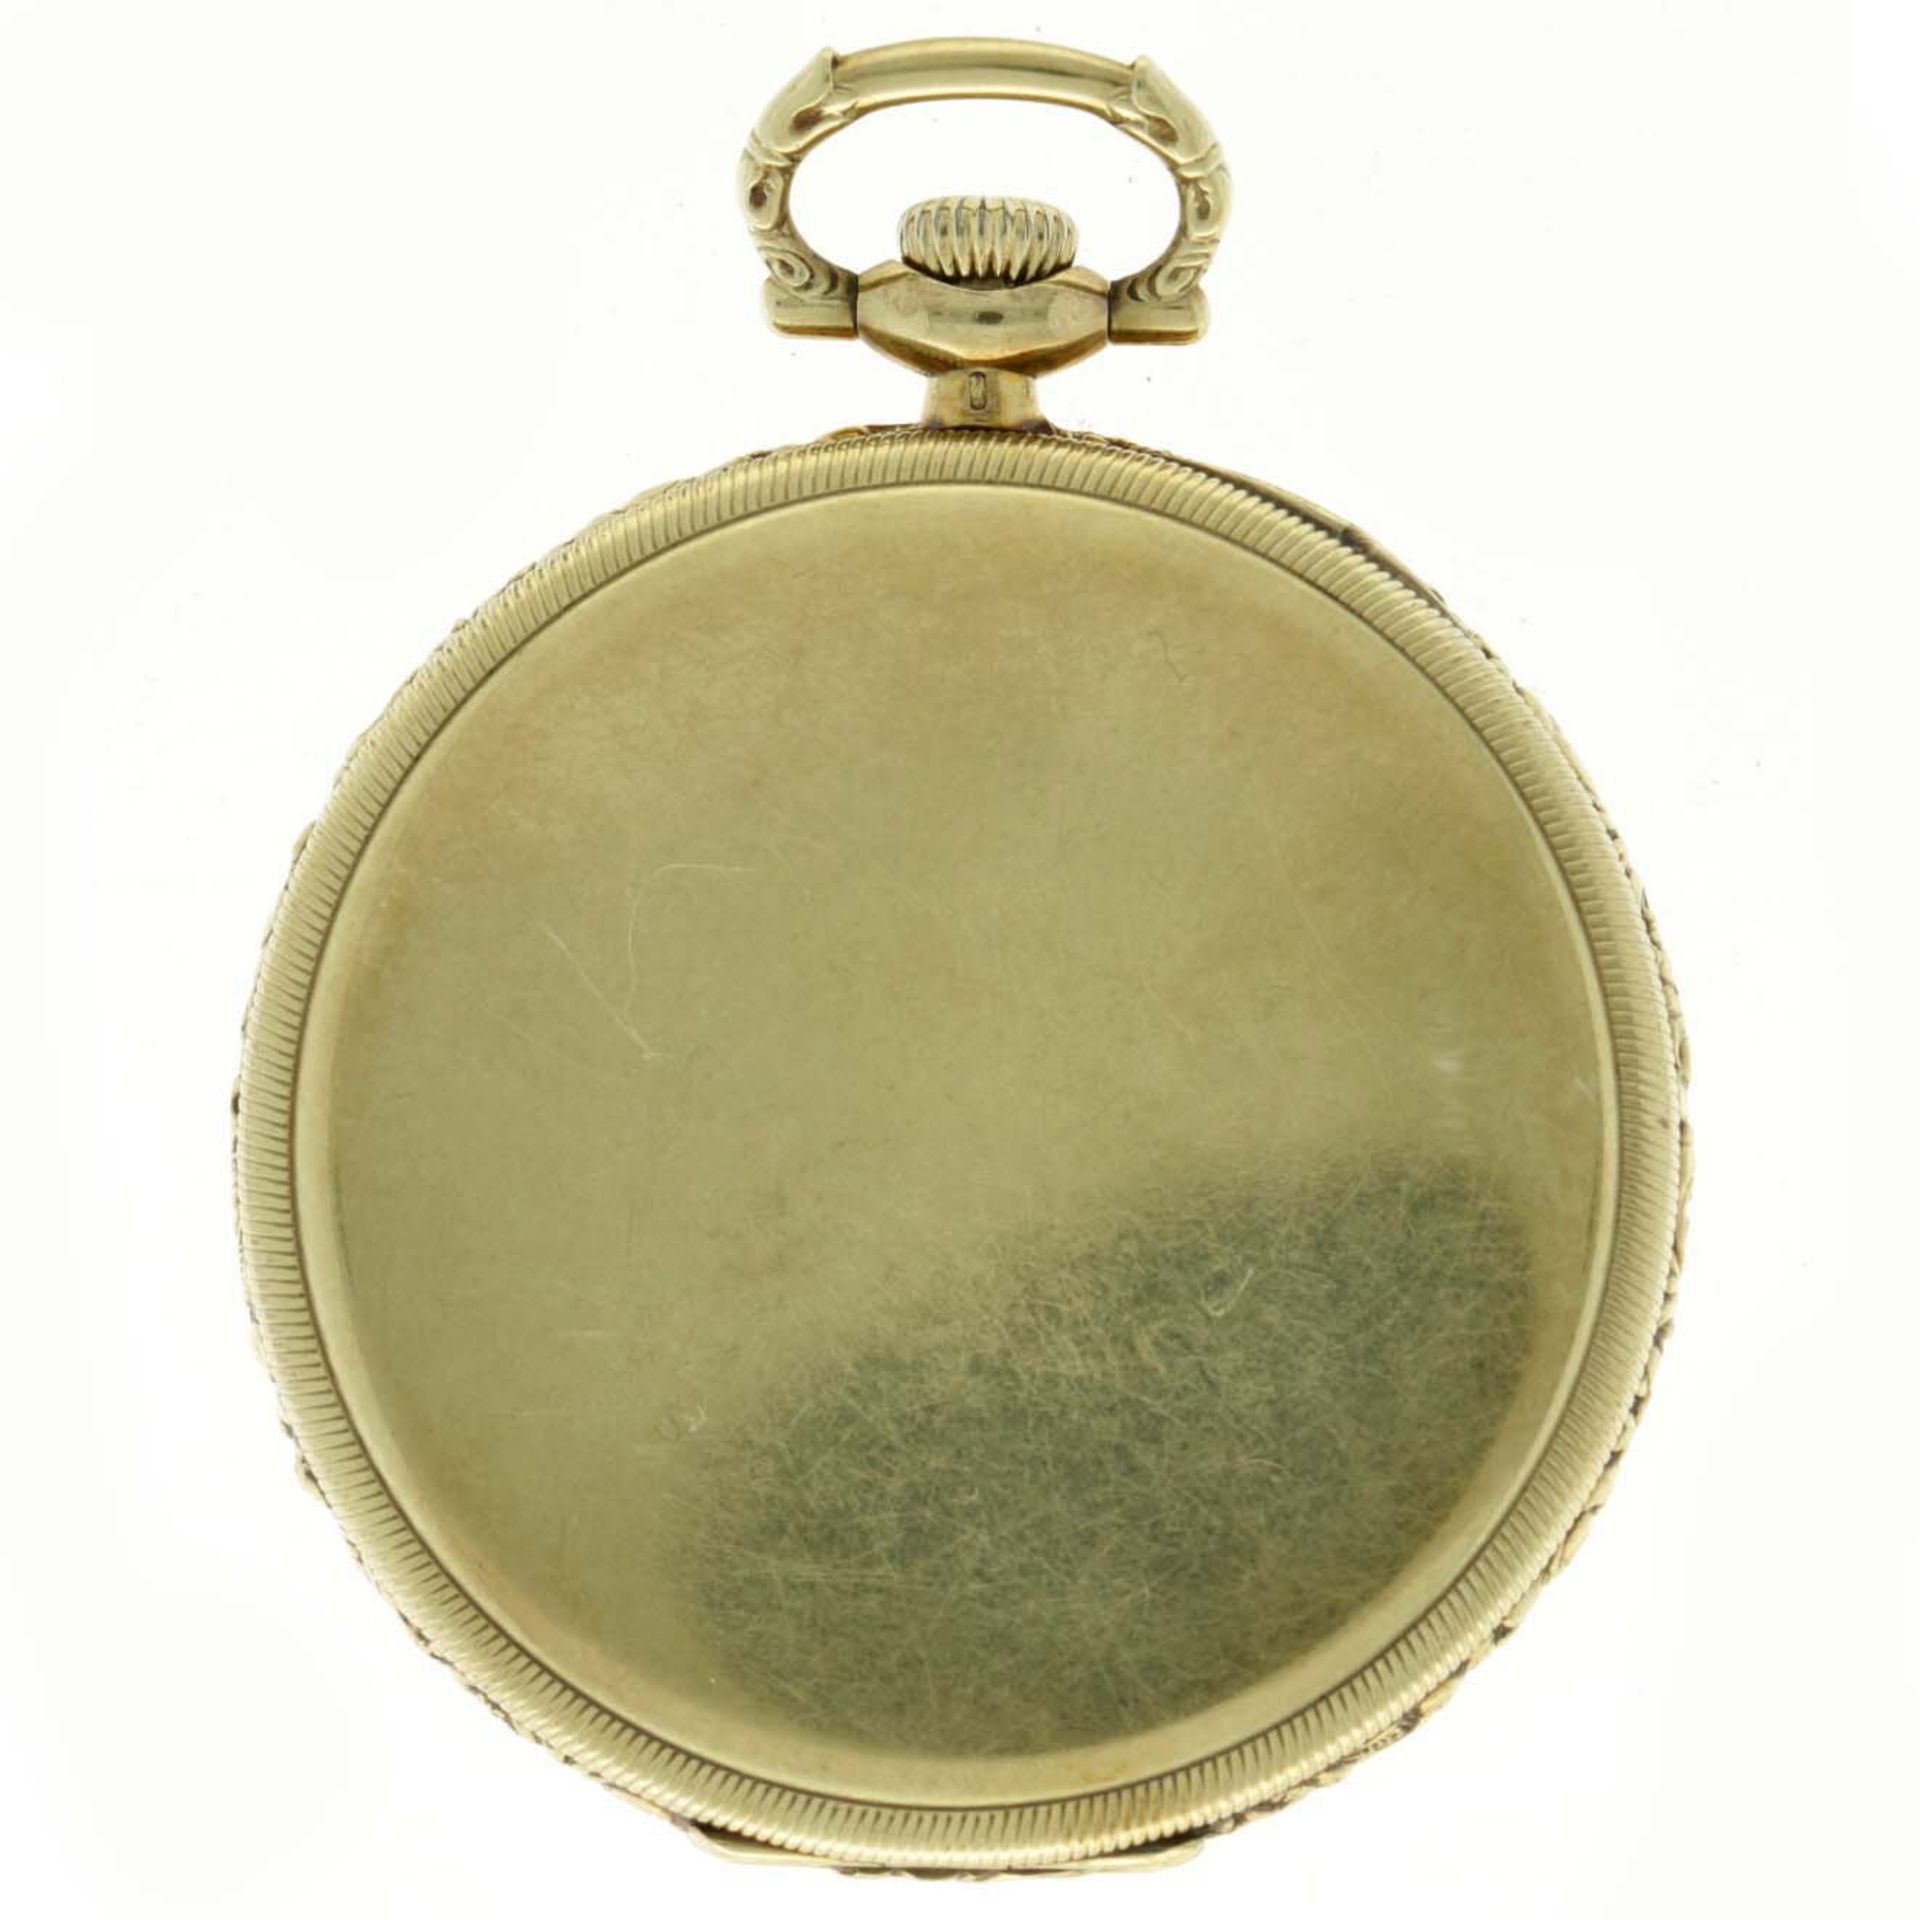 No Reserve - 14K Longines Vintage 14K. yellow gold pocket watch 4762699 - Men's pocket watch. - Image 2 of 4